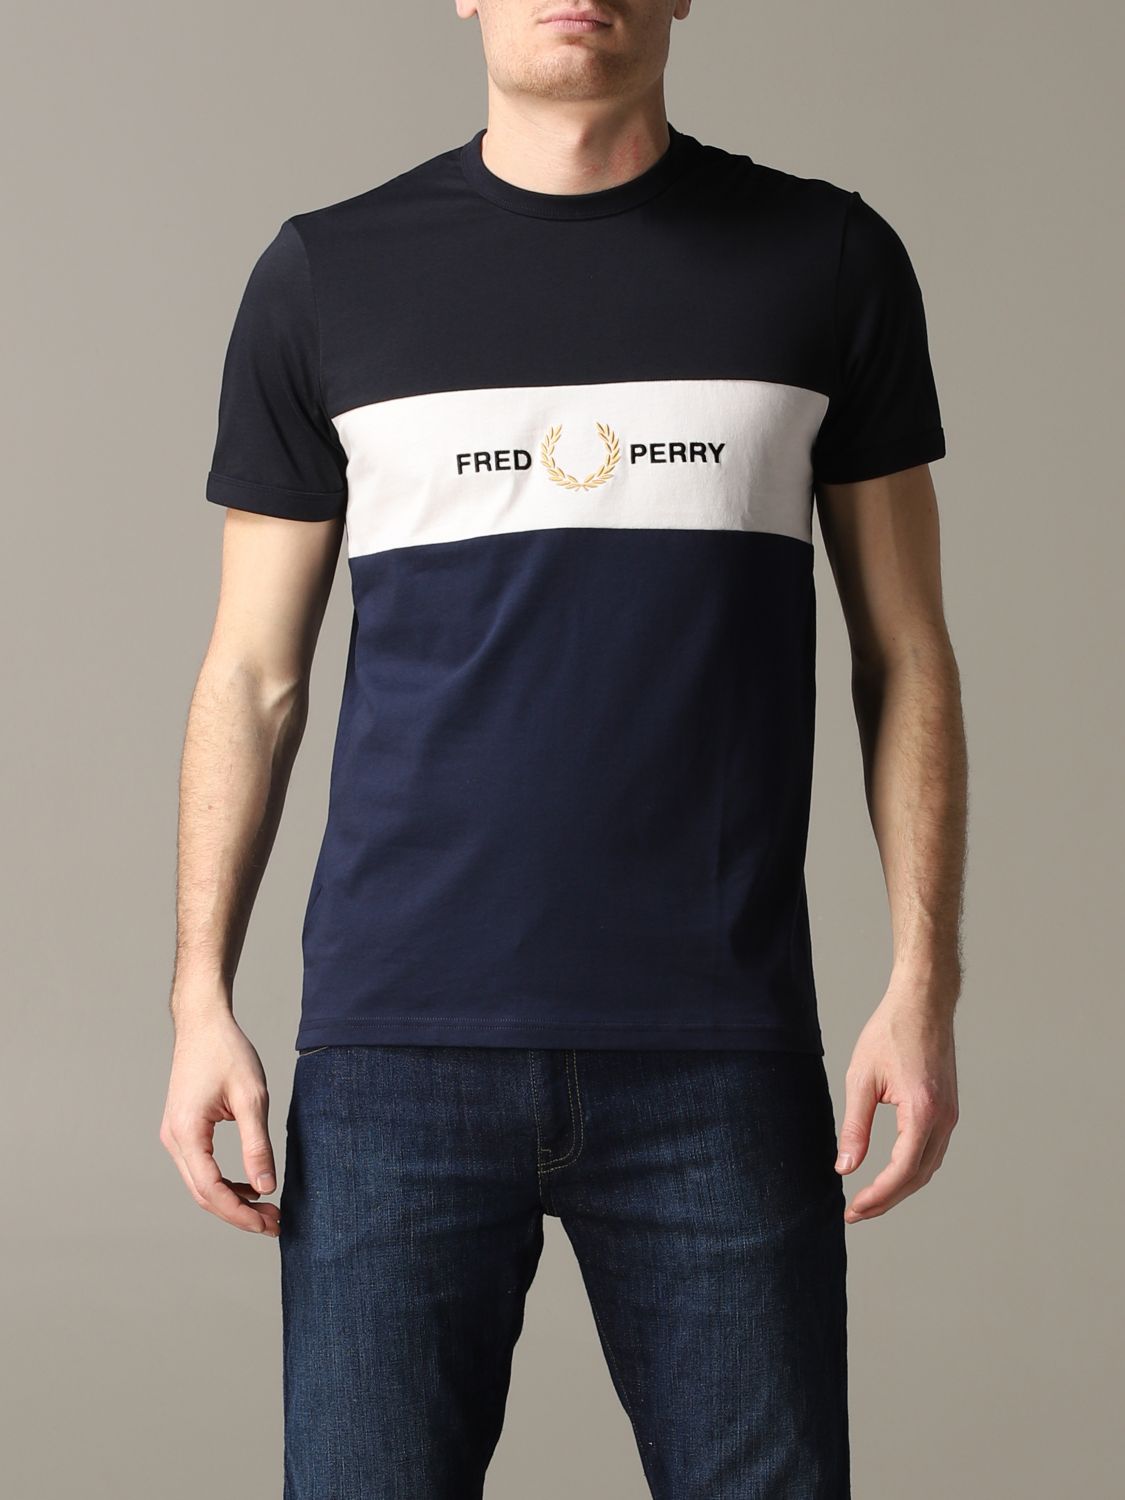 Fred Perry T Shirt Flash Sales, 54% OFF | www.txarango.com